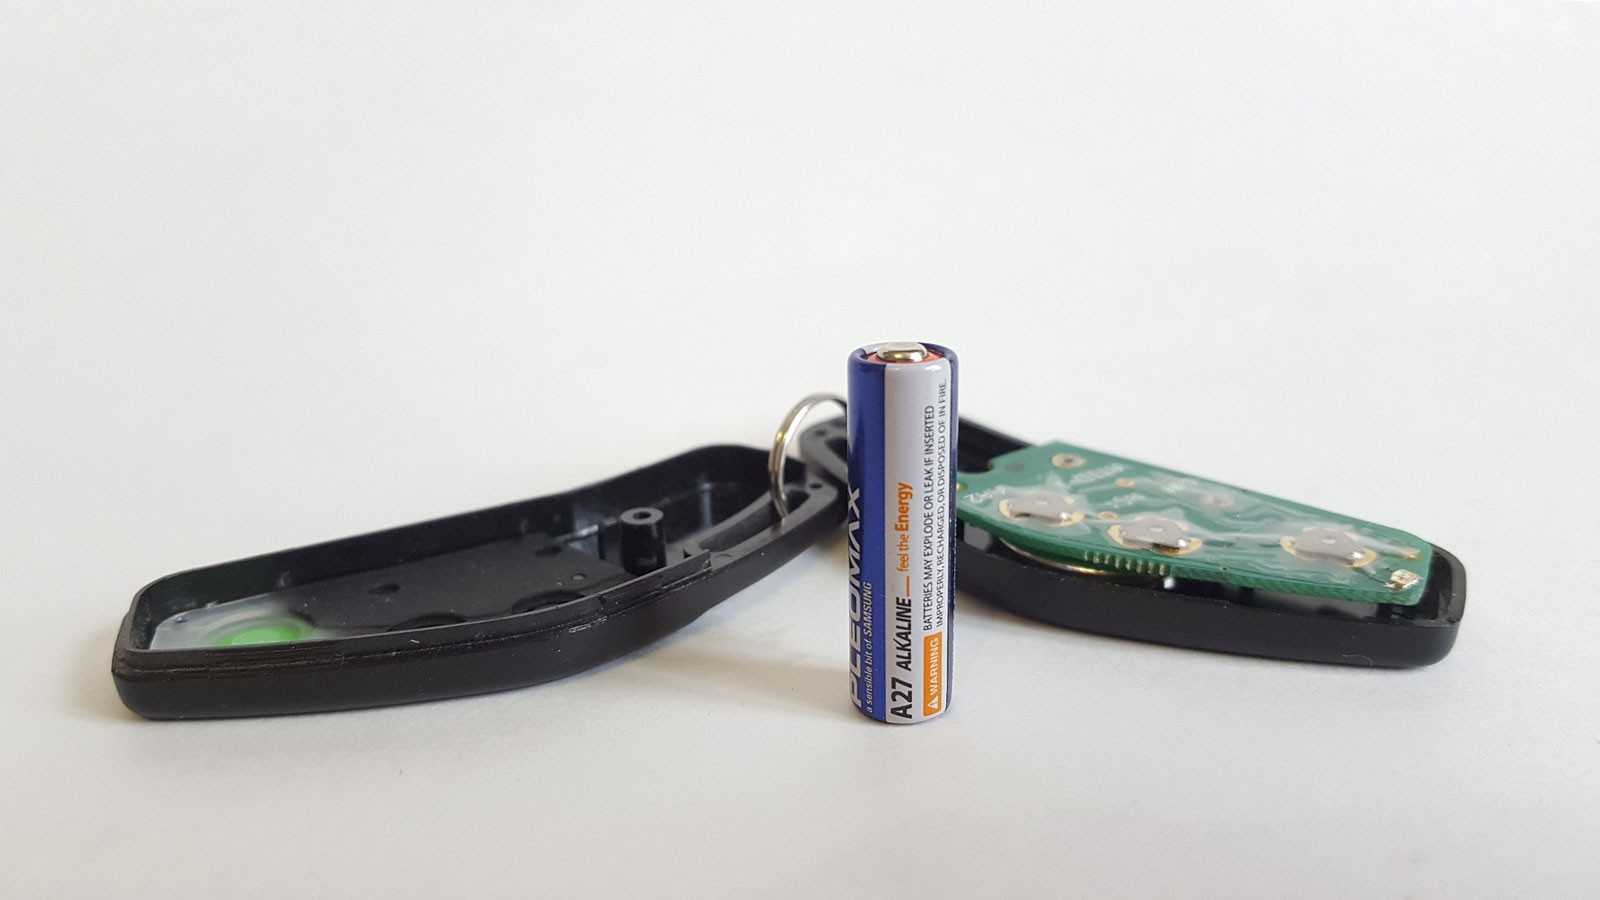 Как поменять батарейку в ключе мерседес? советы профи